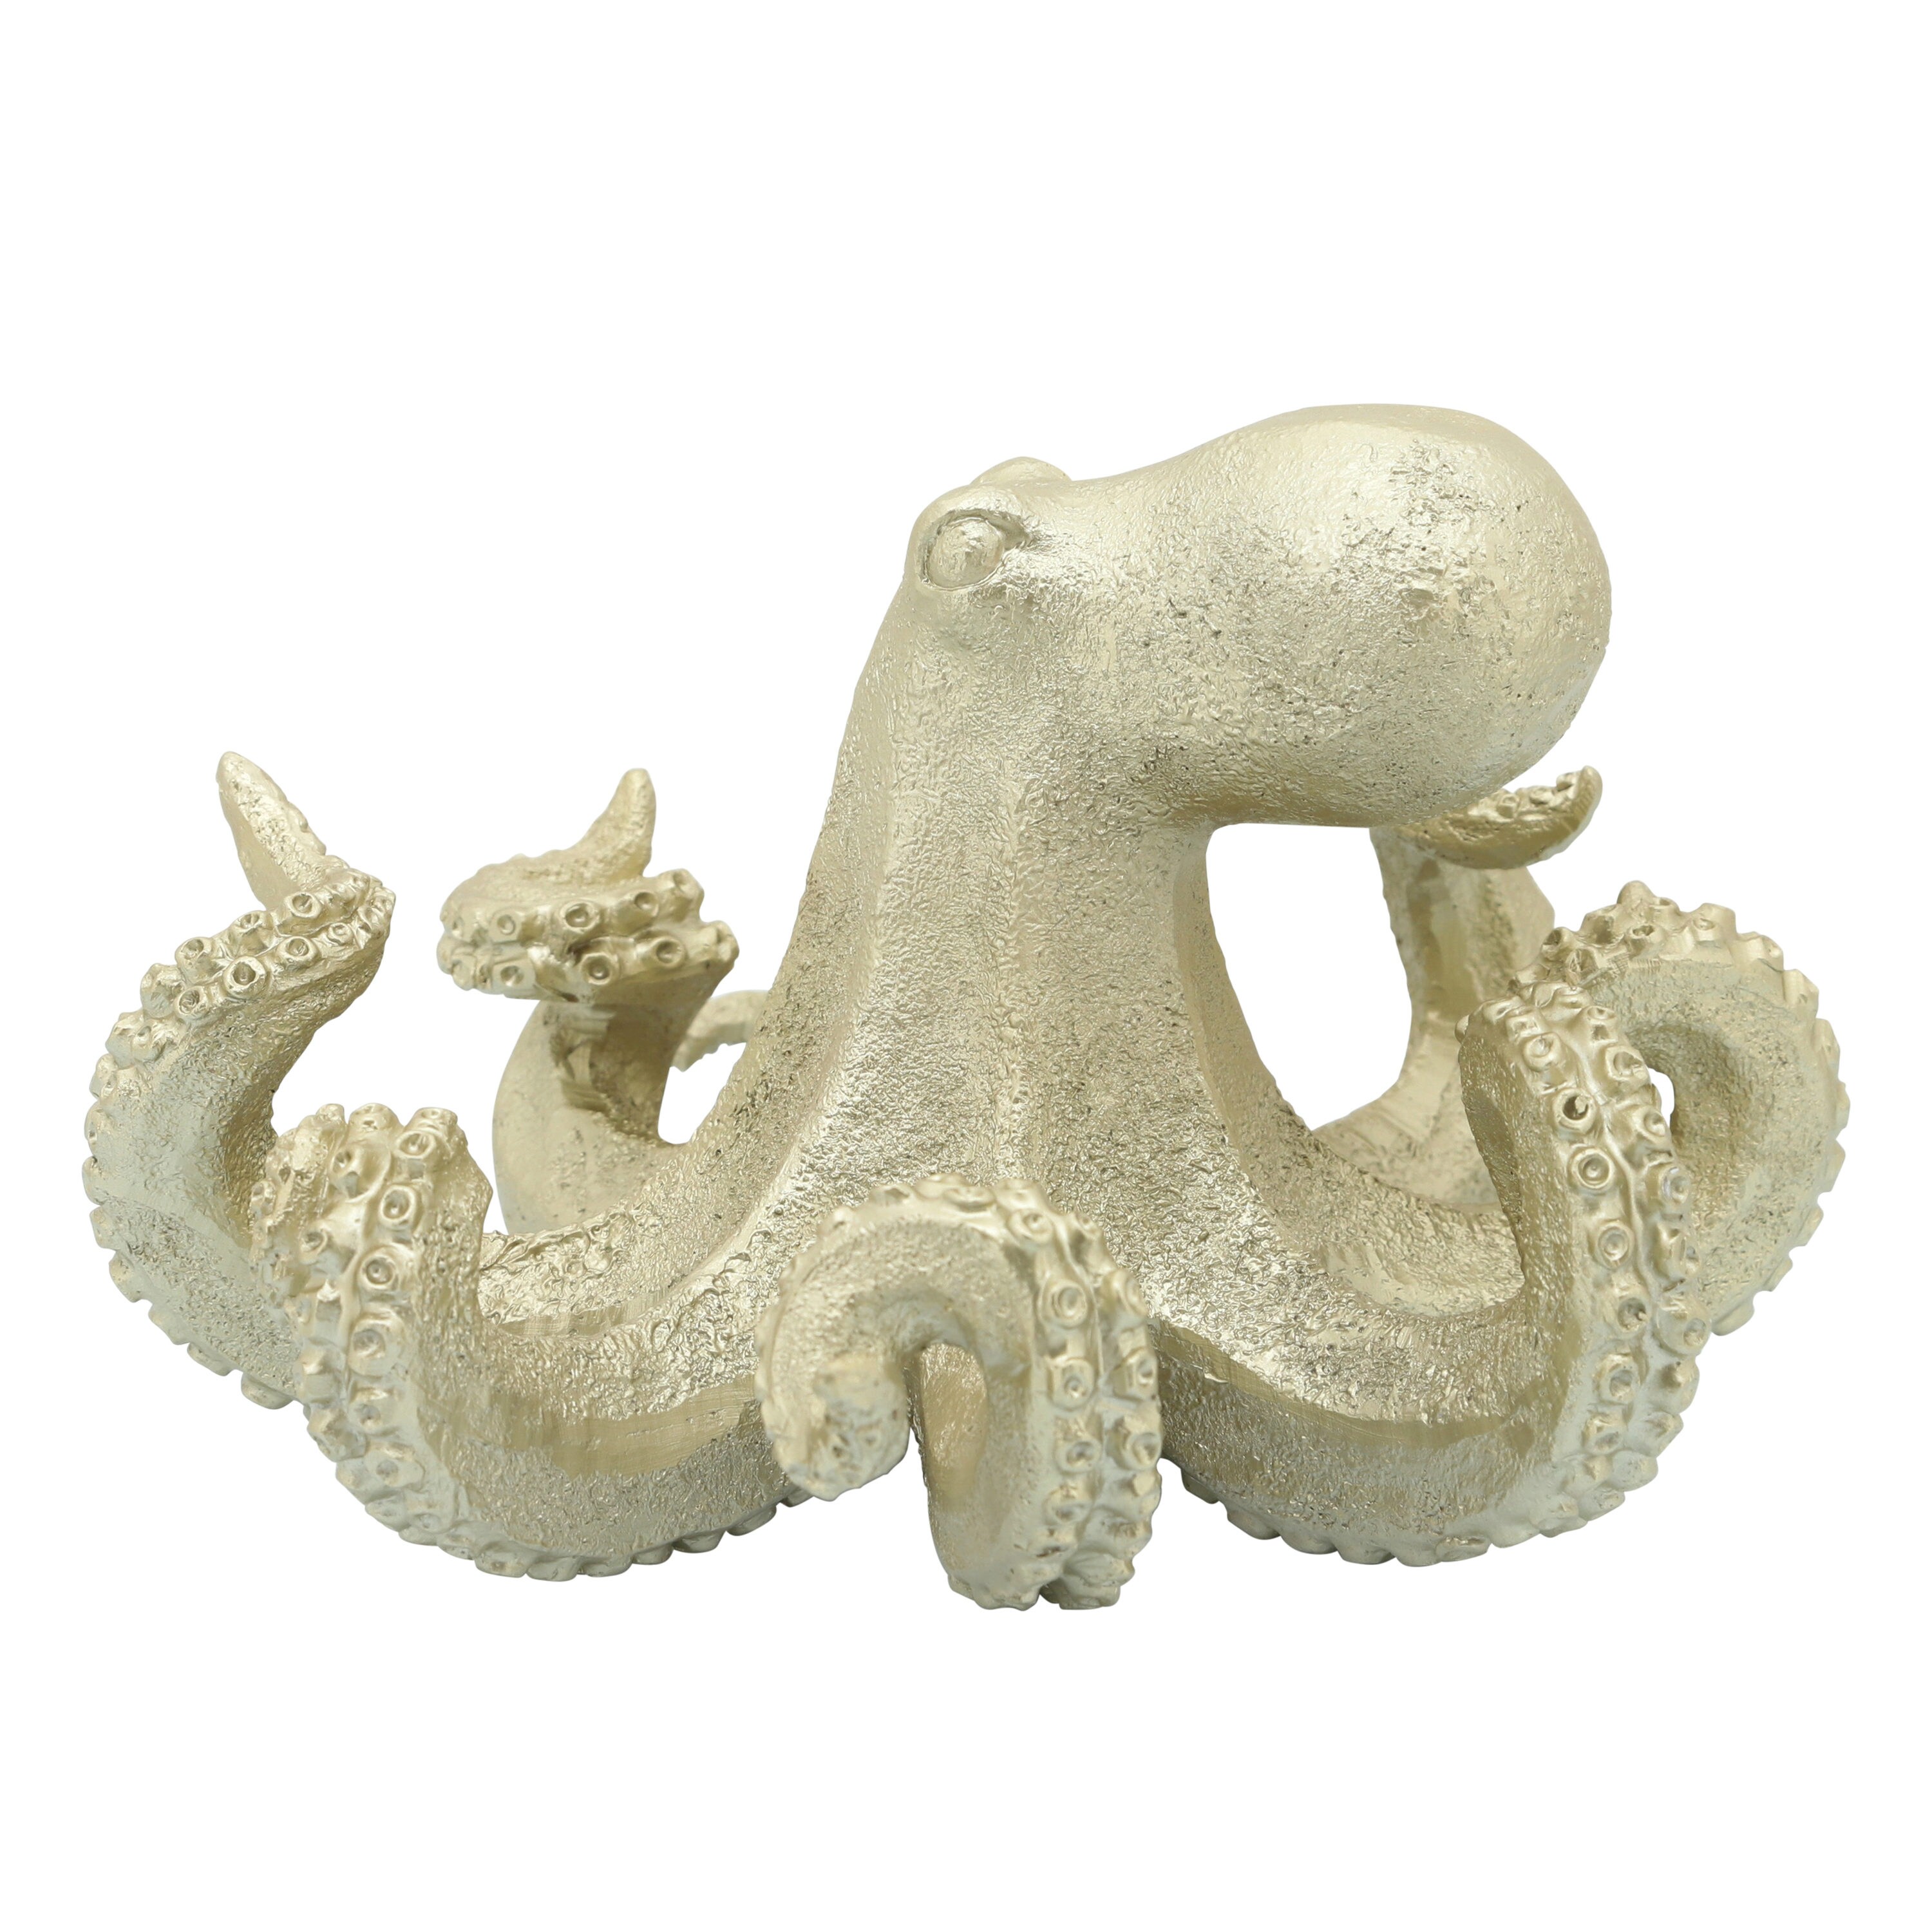 Octopus Decorative Accessories at Lowes.com